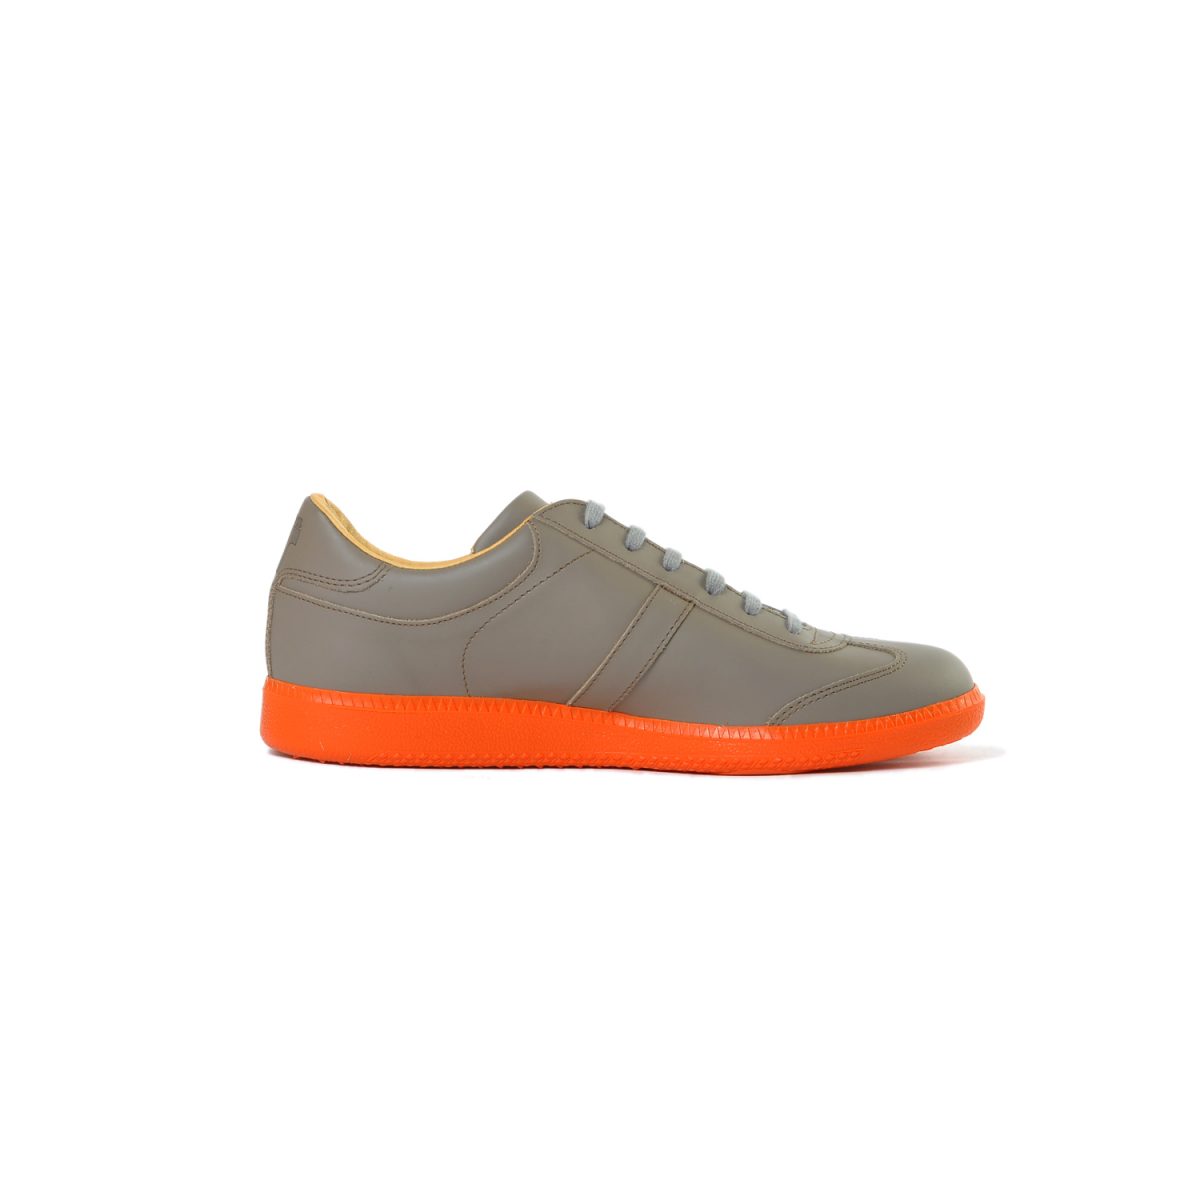 Tisza shoes - Compakt - Earth-orange